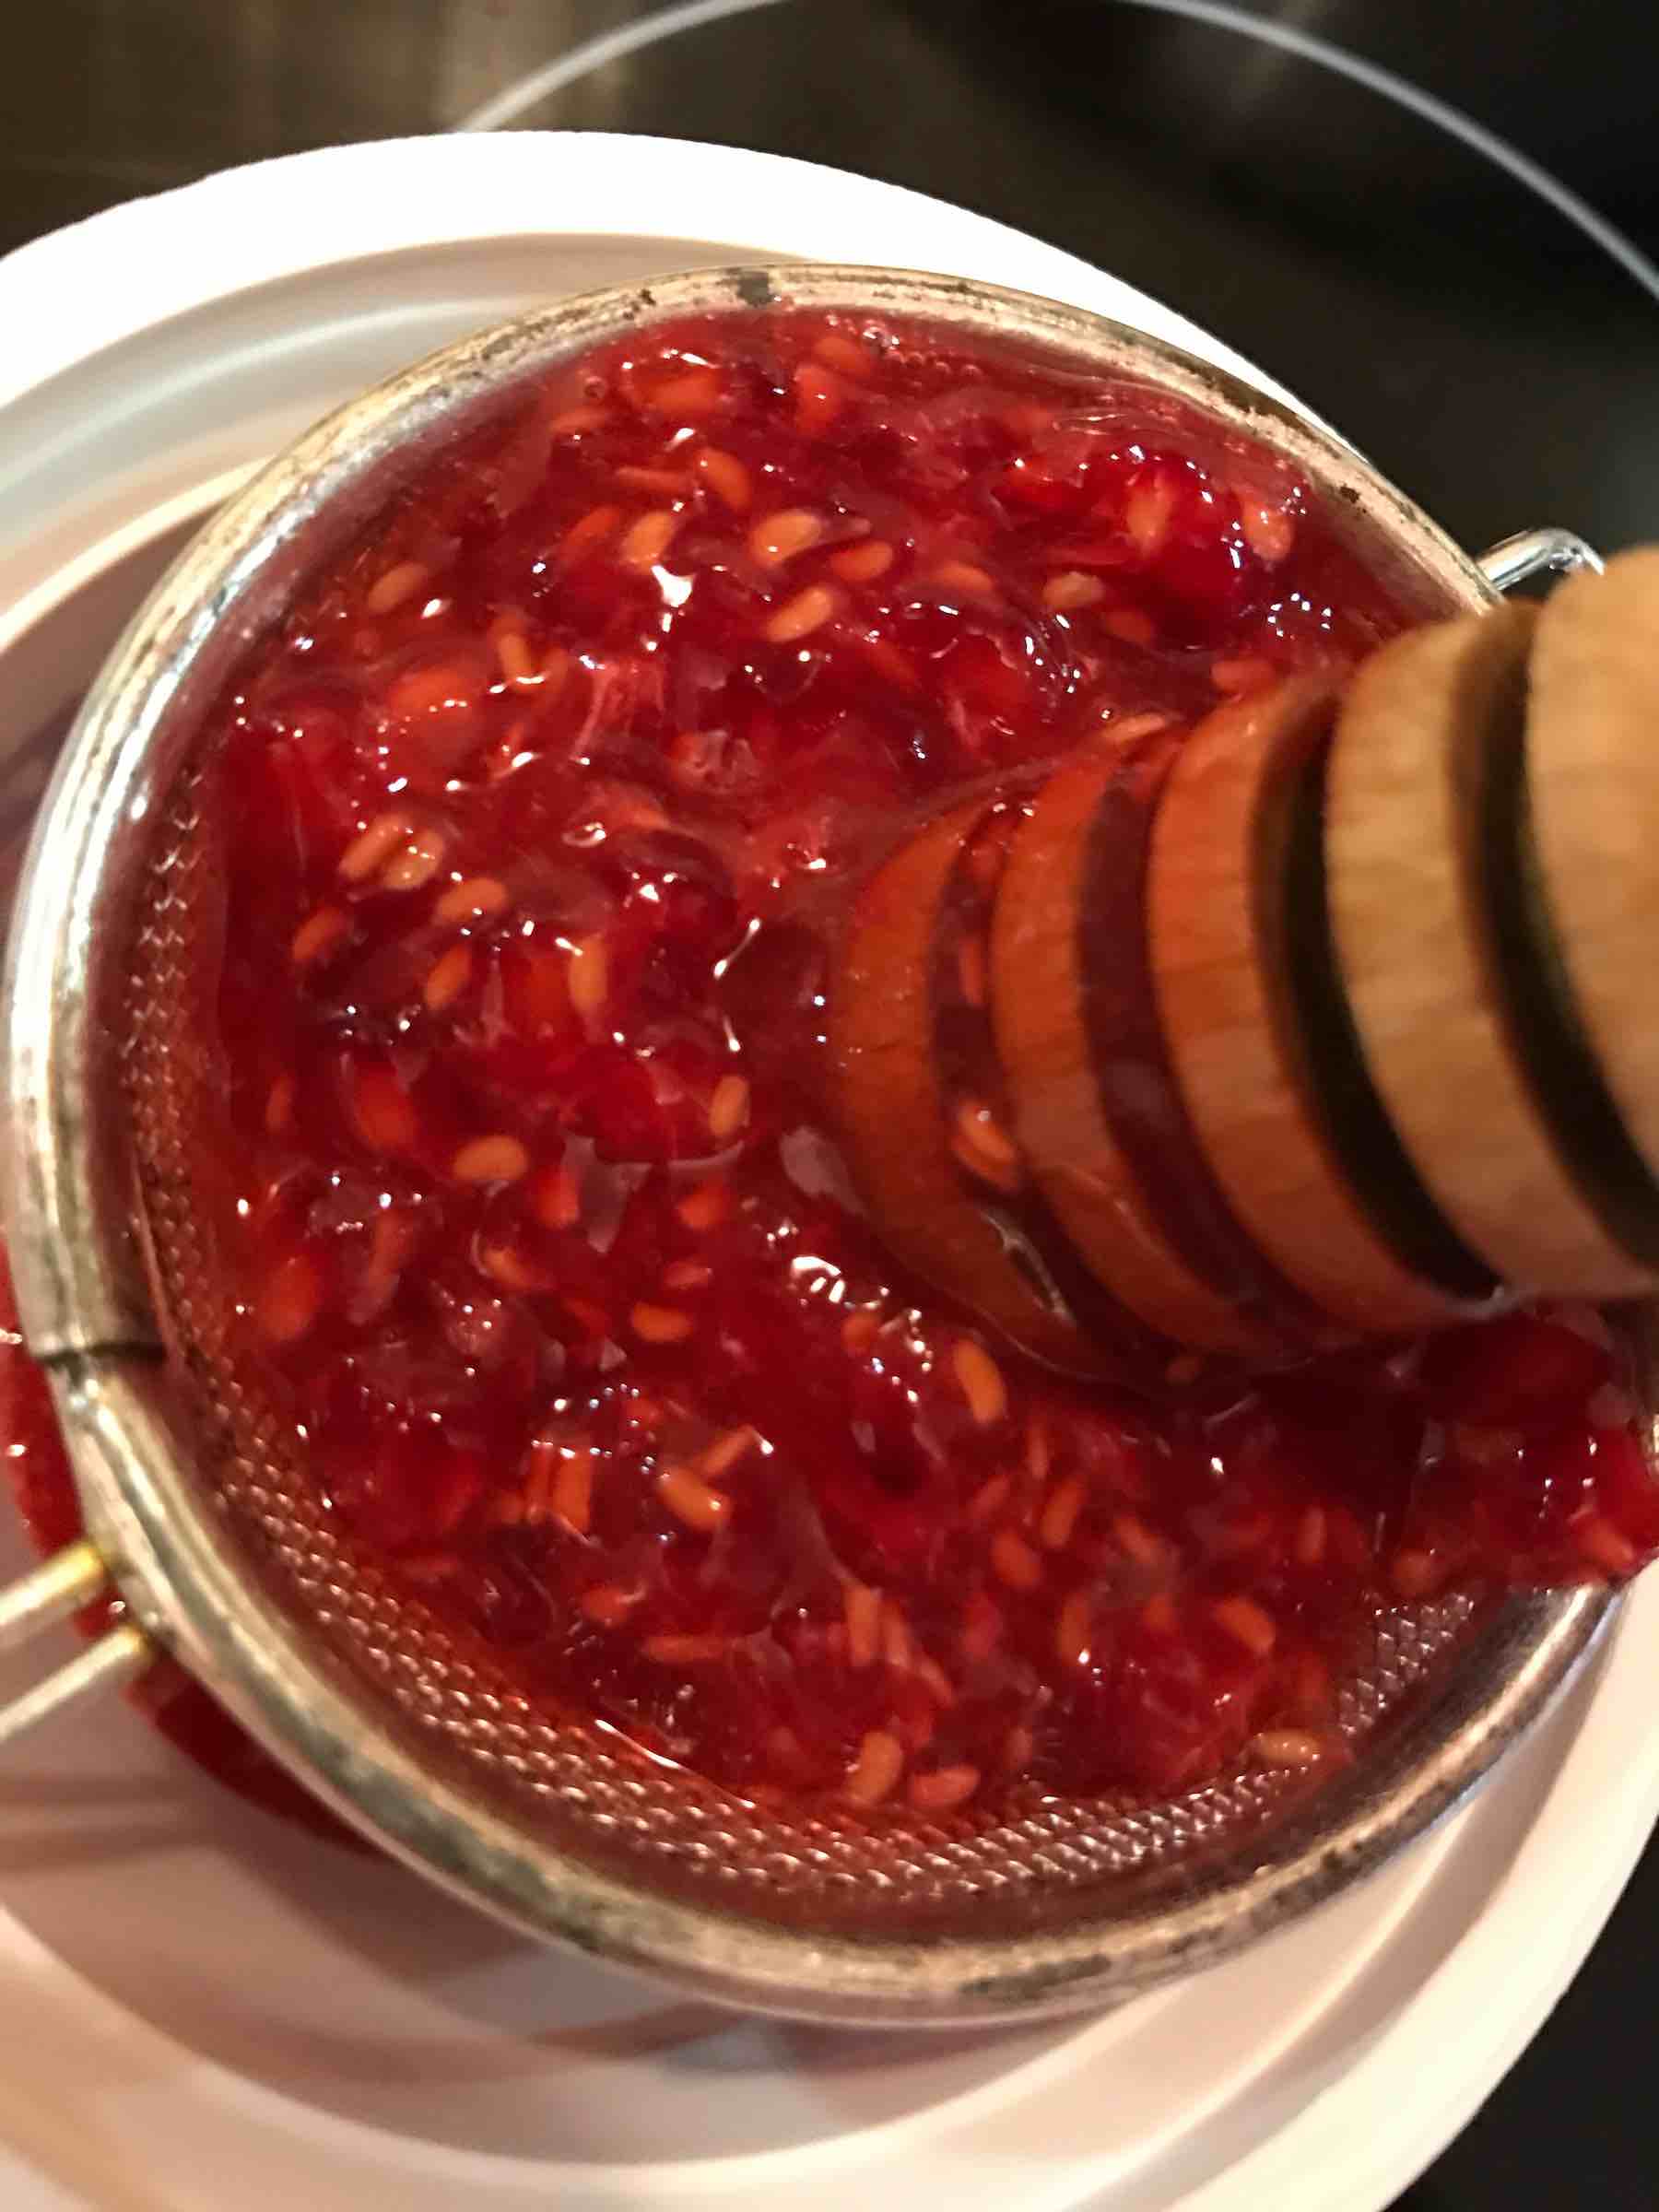 Raspberries being mashed